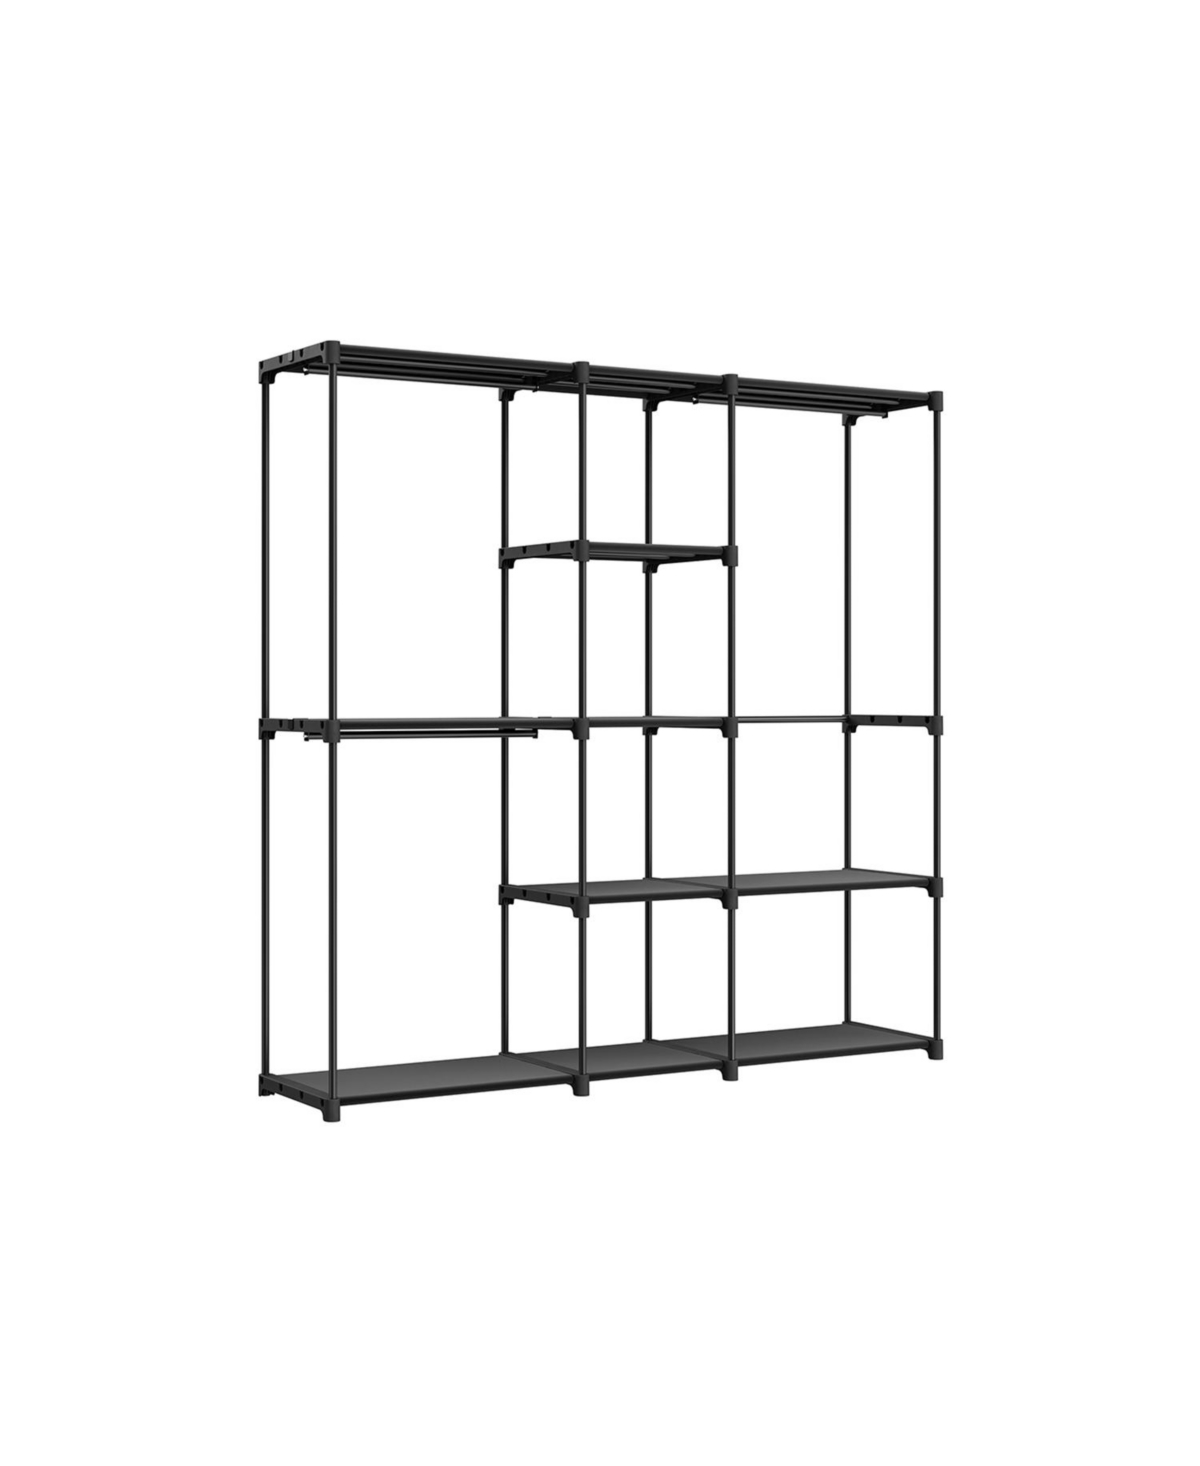 Freestanding Closet Organizer, Portable Wardrobe with Hanging Rods - Black